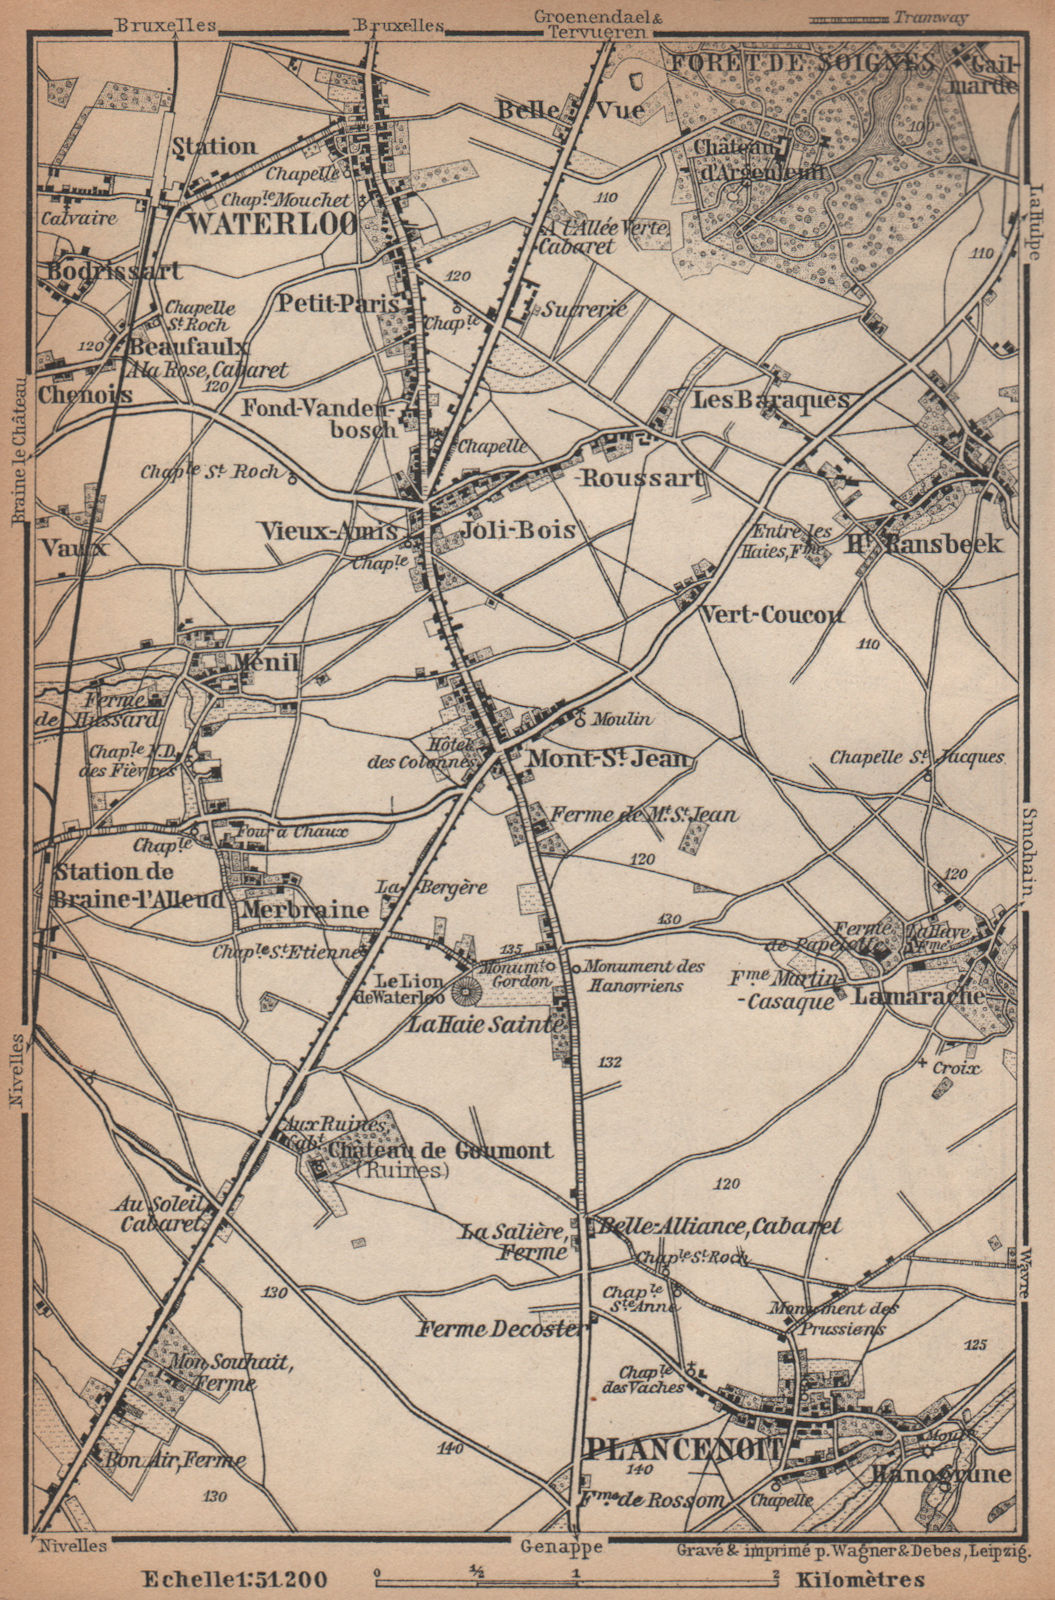 Associate Product THE BATTLEFIELD OF WATERLOO. Plancenoit. Belgium carte. BAEDEKER 1901 old map